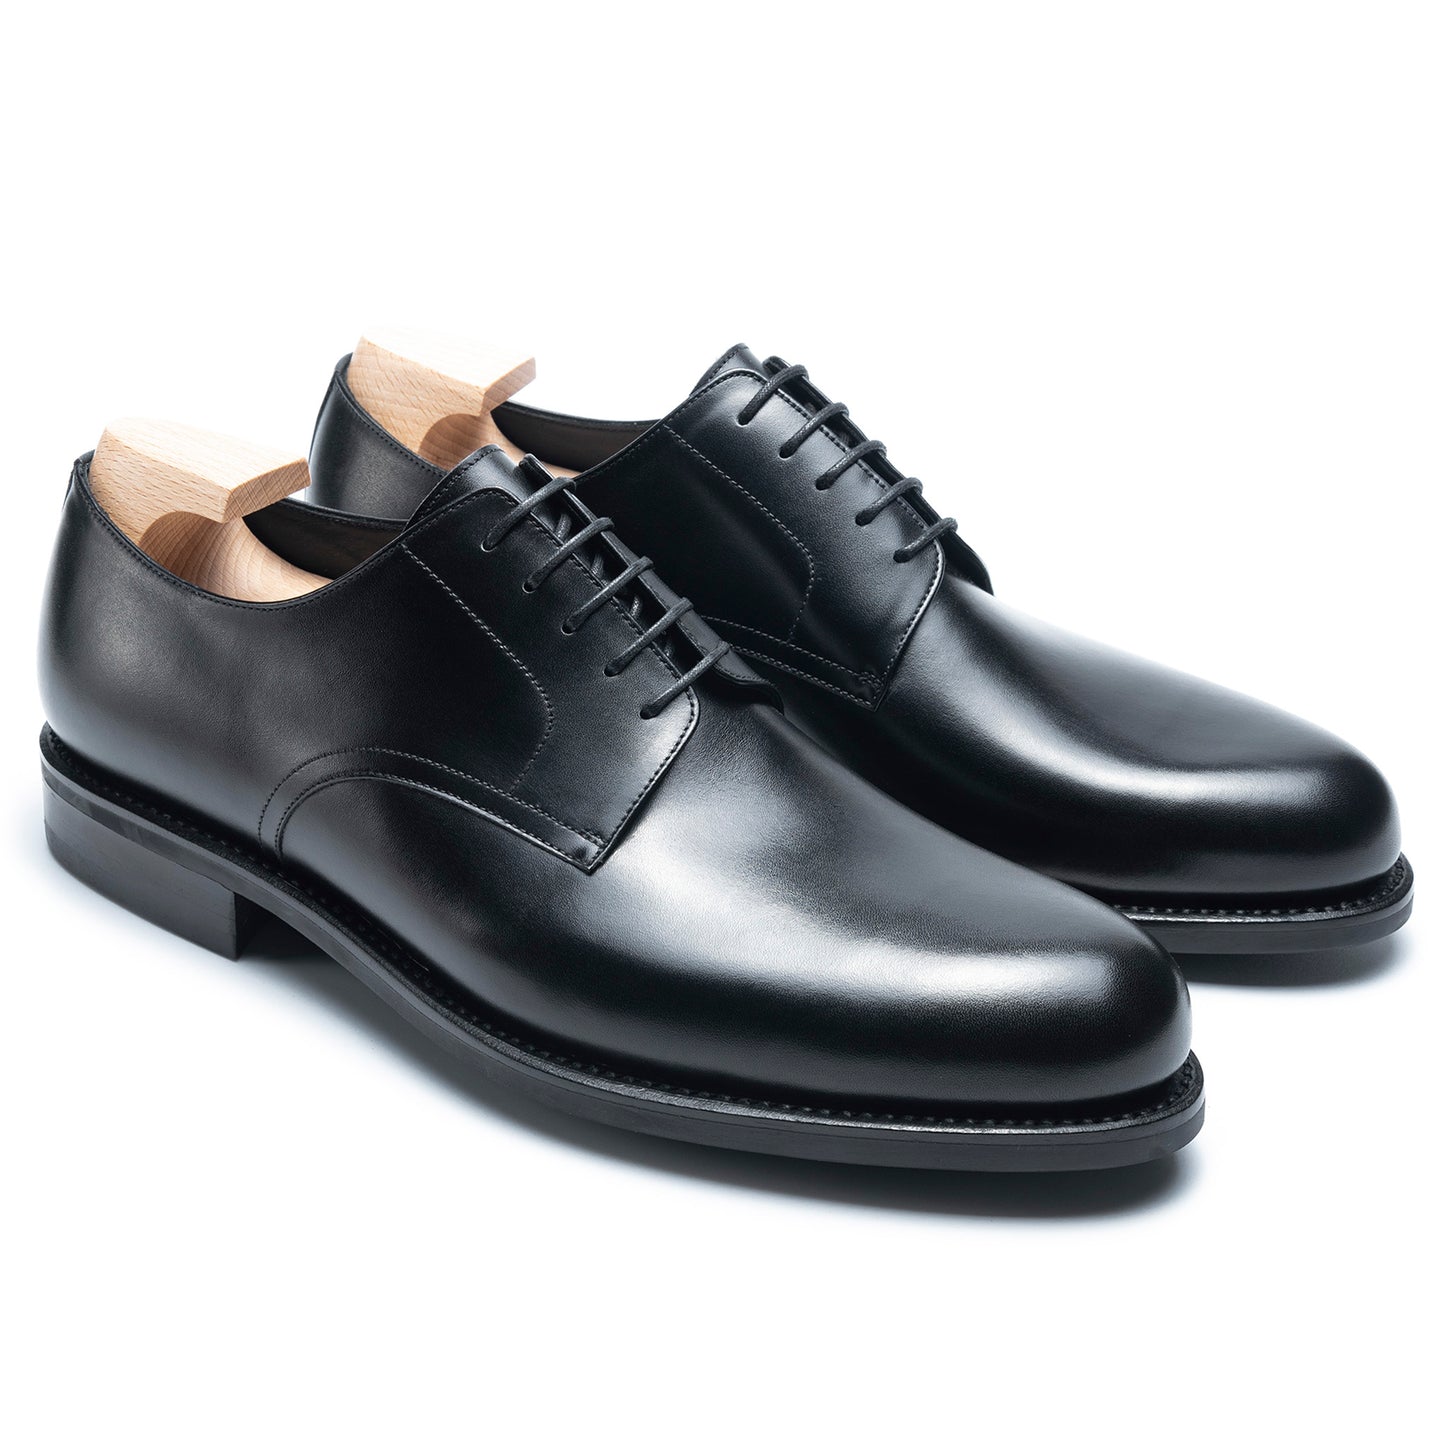 TLB Mallorca leather shoes 693 / MADISON / BOXCALF BLACK